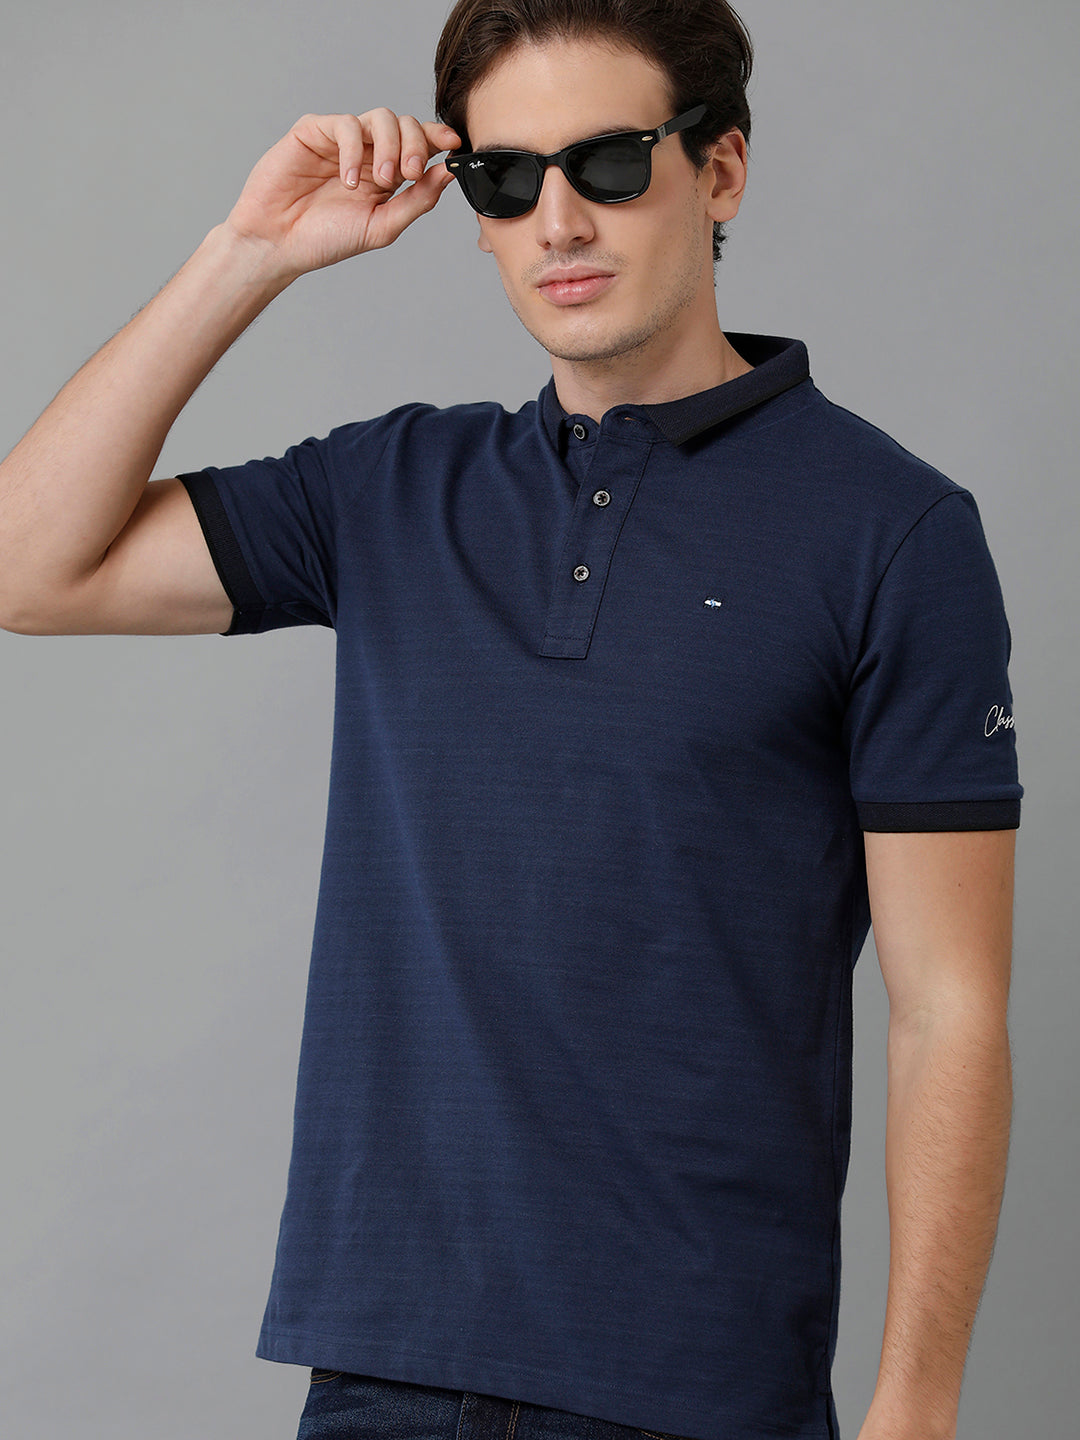 Classic Polo Men's Cotton Solid Half Sleeve Slim Fit Polo Neck Dark Blue Color T-Shirt | Prm - 747 A